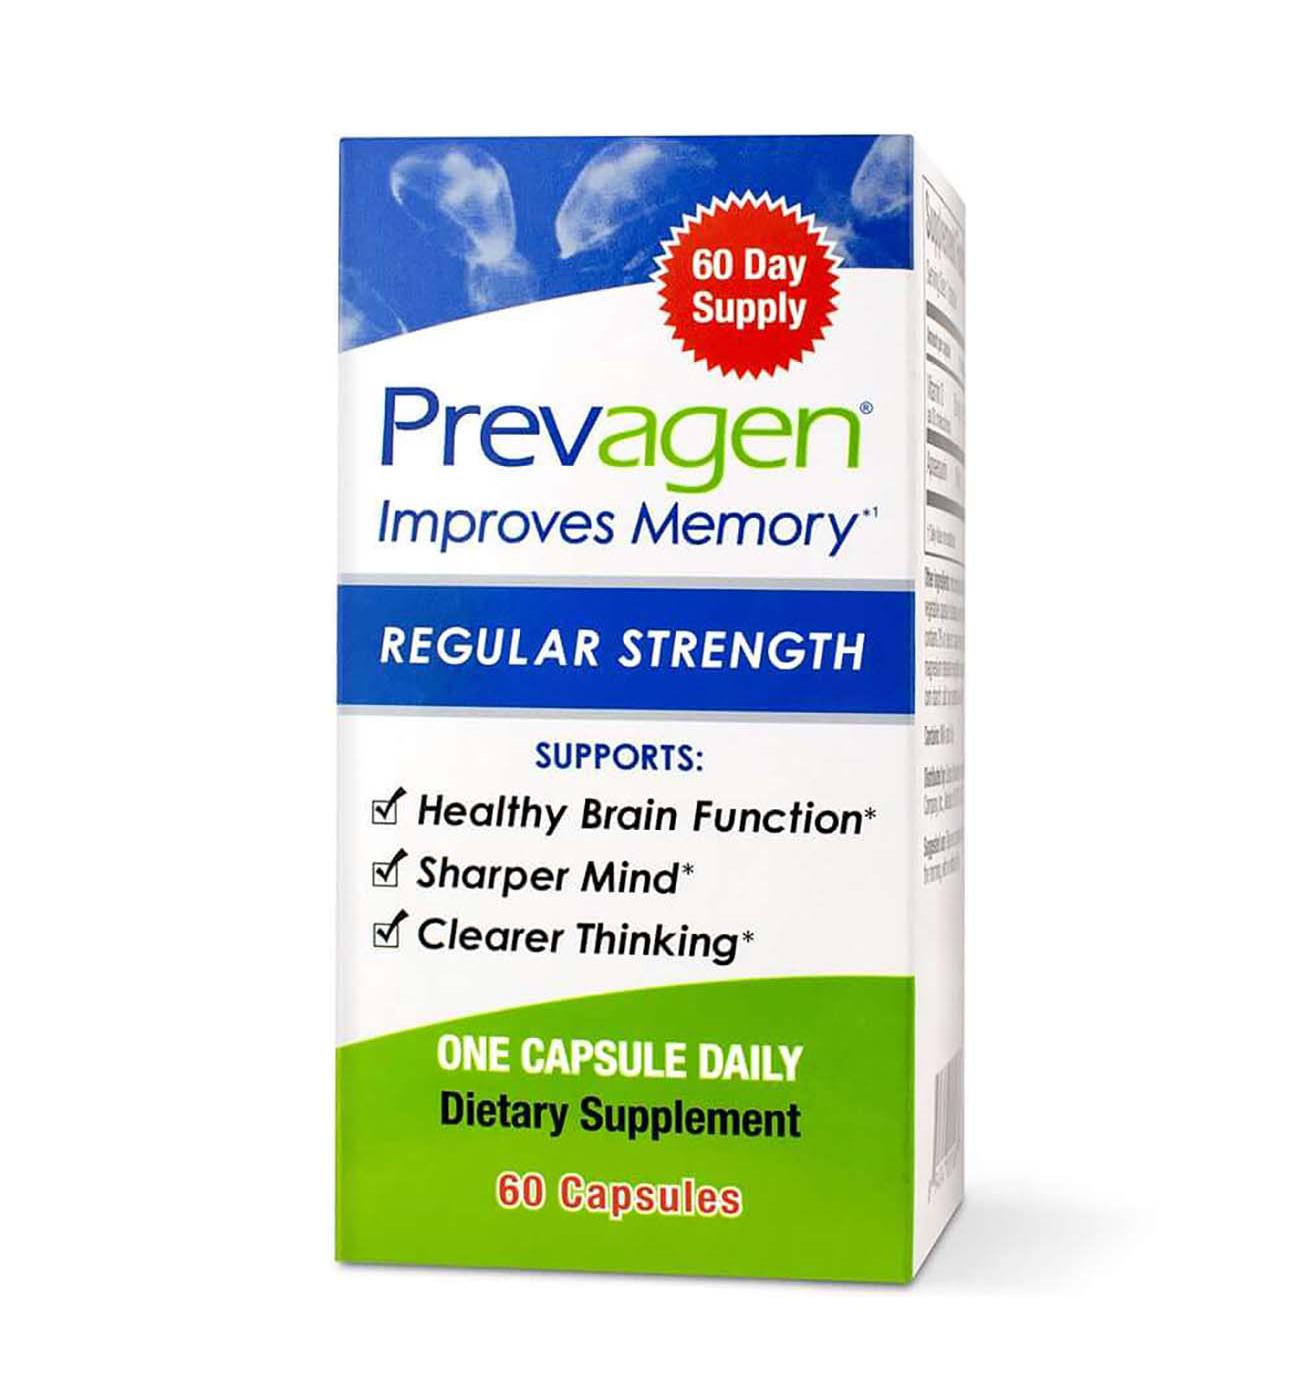 Prevagen Improves Memory Capsules, Regular Strength; image 1 of 2